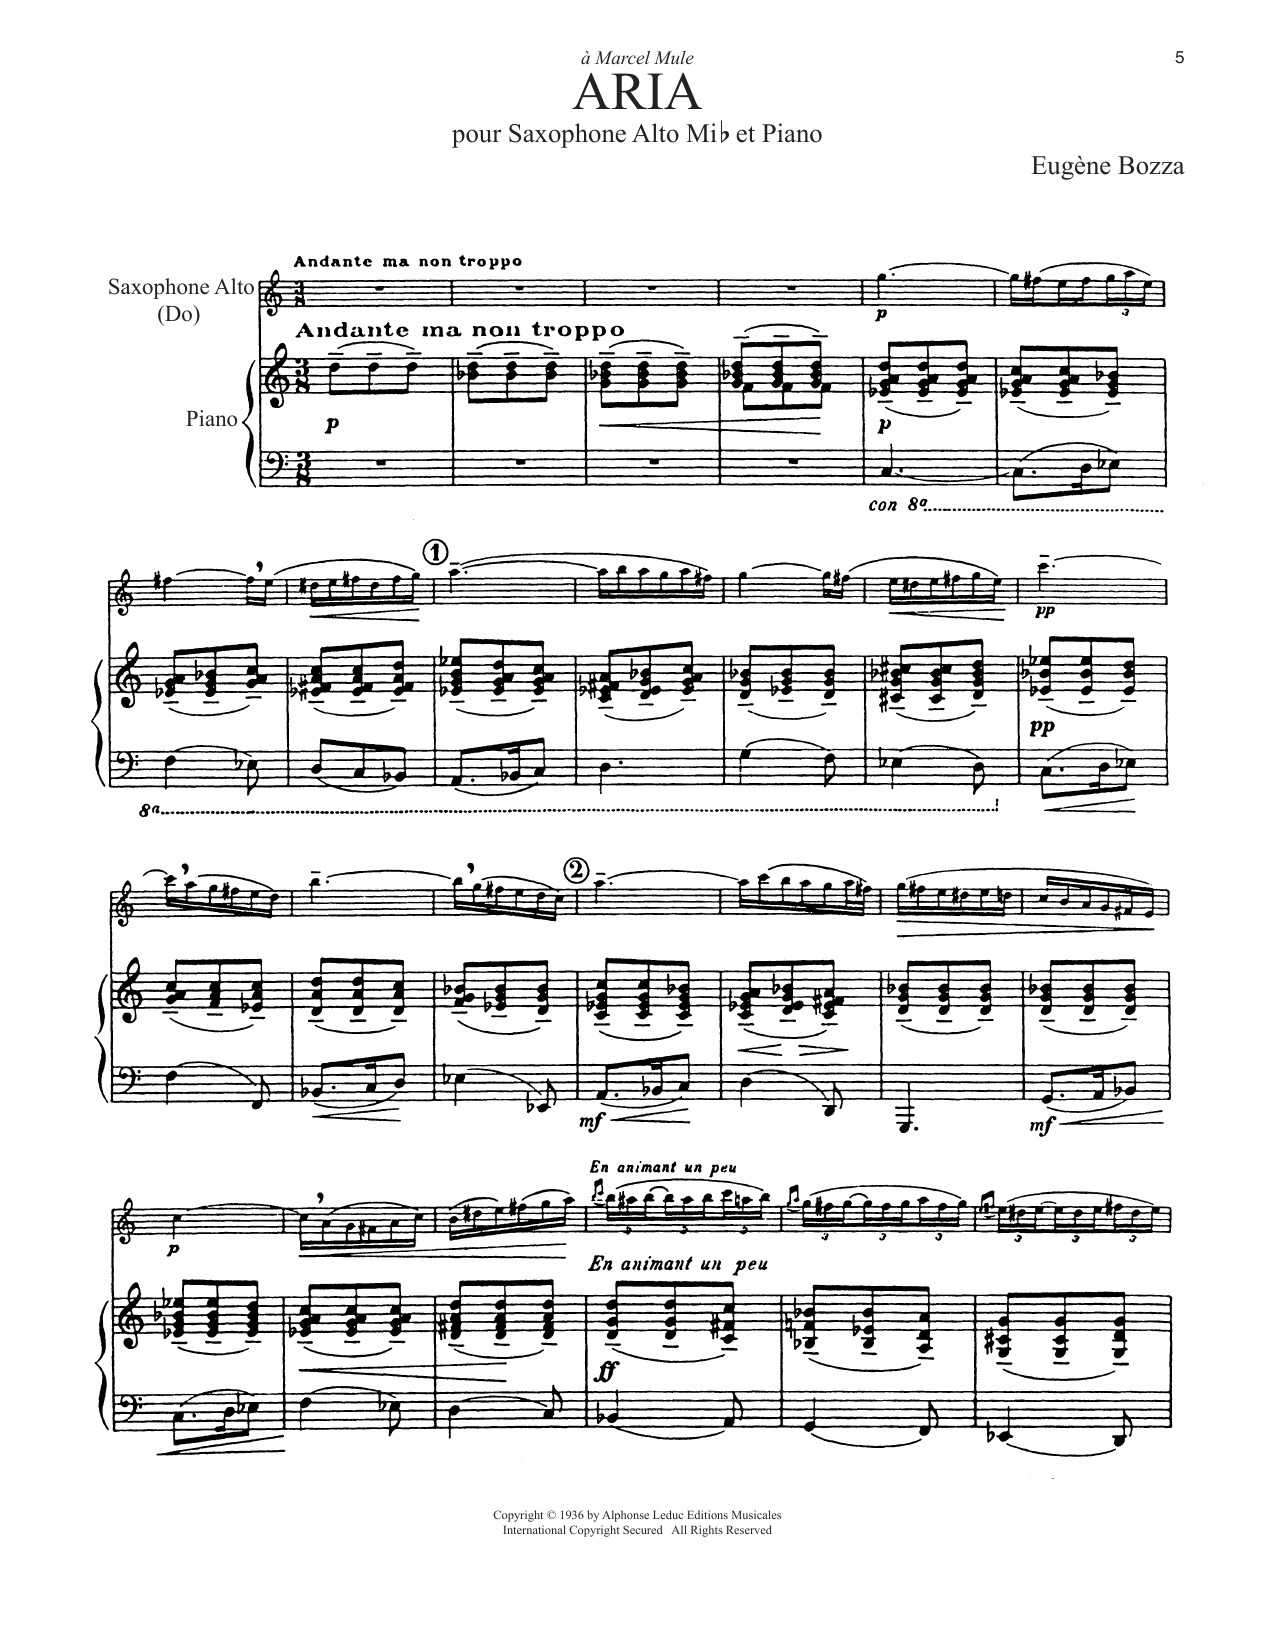 Eugène Bozza Aria Sheet Music Notes & Chords for Alto Sax and Piano - Download or Print PDF